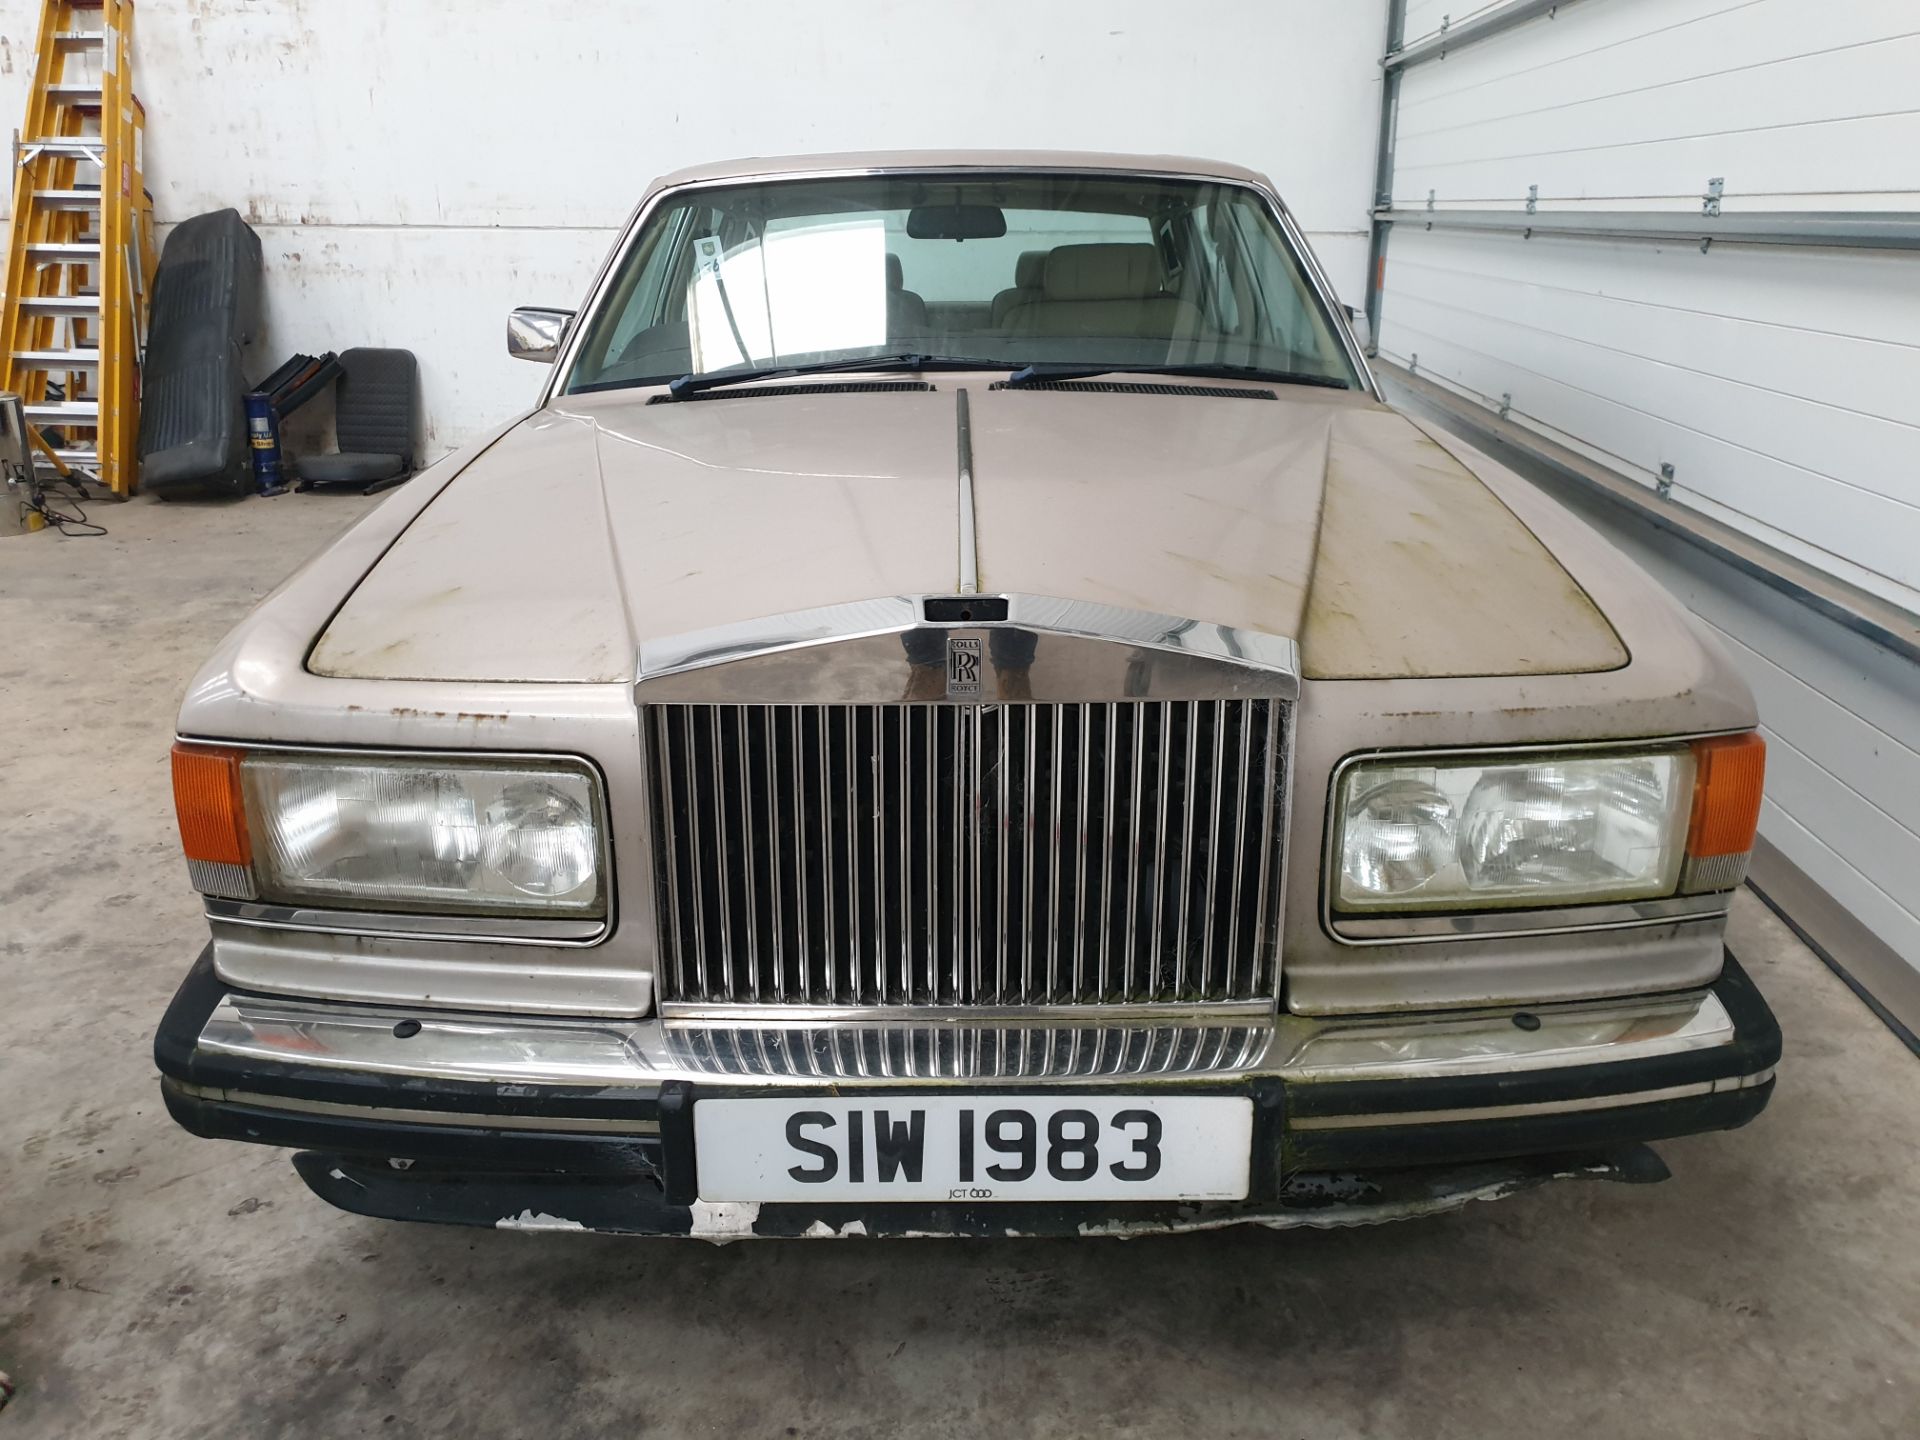 Rolls Royce - Image 9 of 21